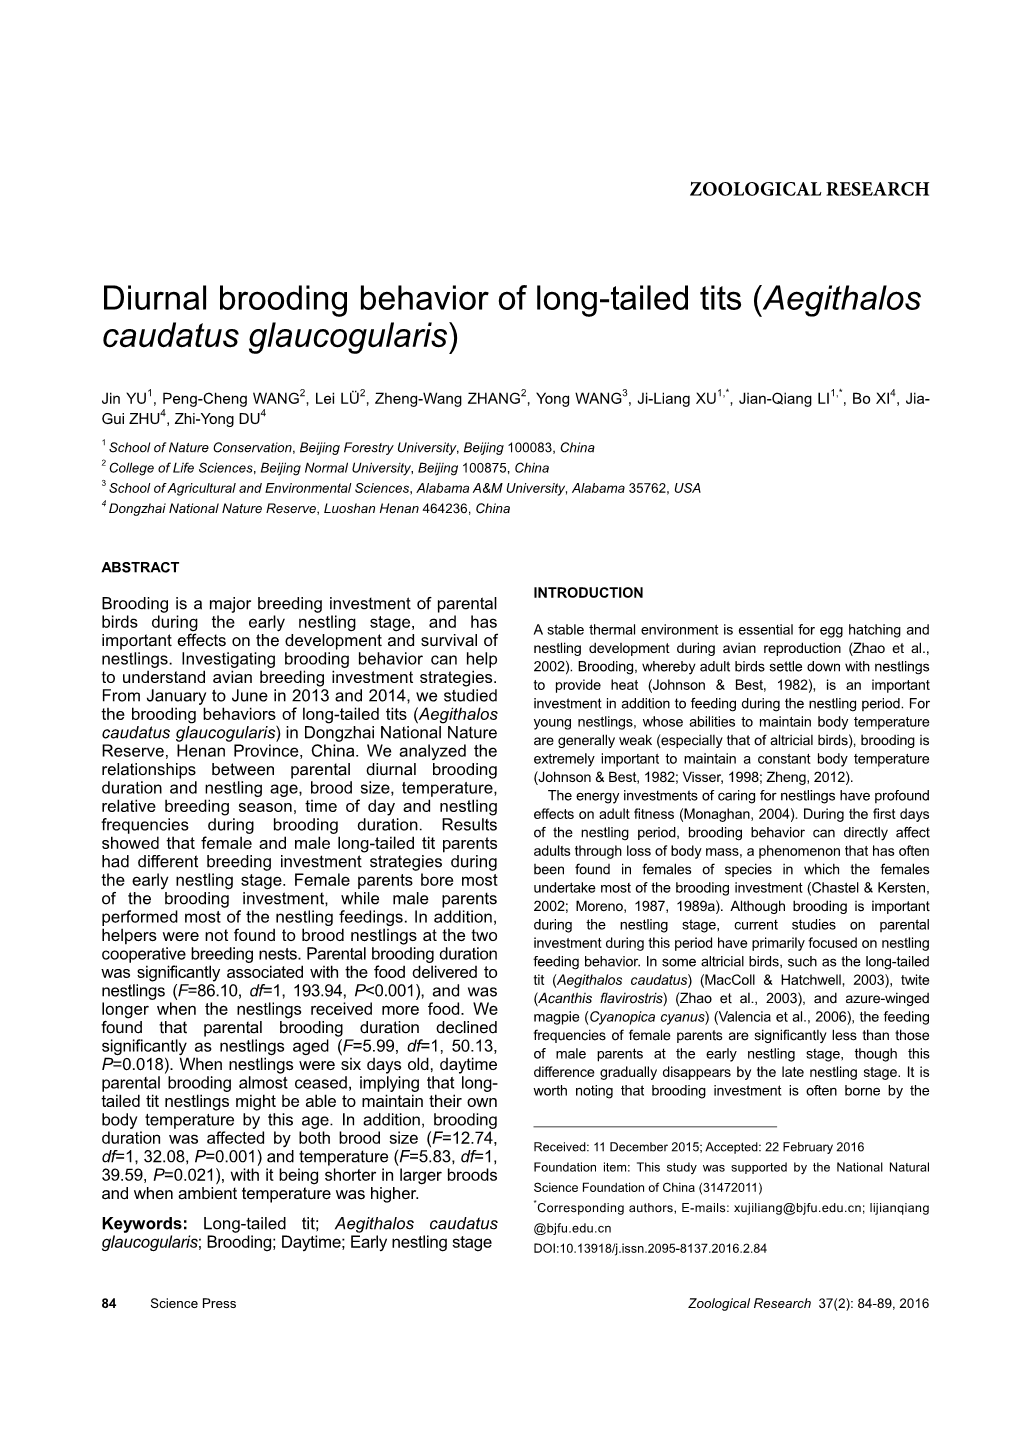 Diurnal Brooding Behavior of Long-Tailed Tits (Aegithalos Caudatus Glaucogularis)